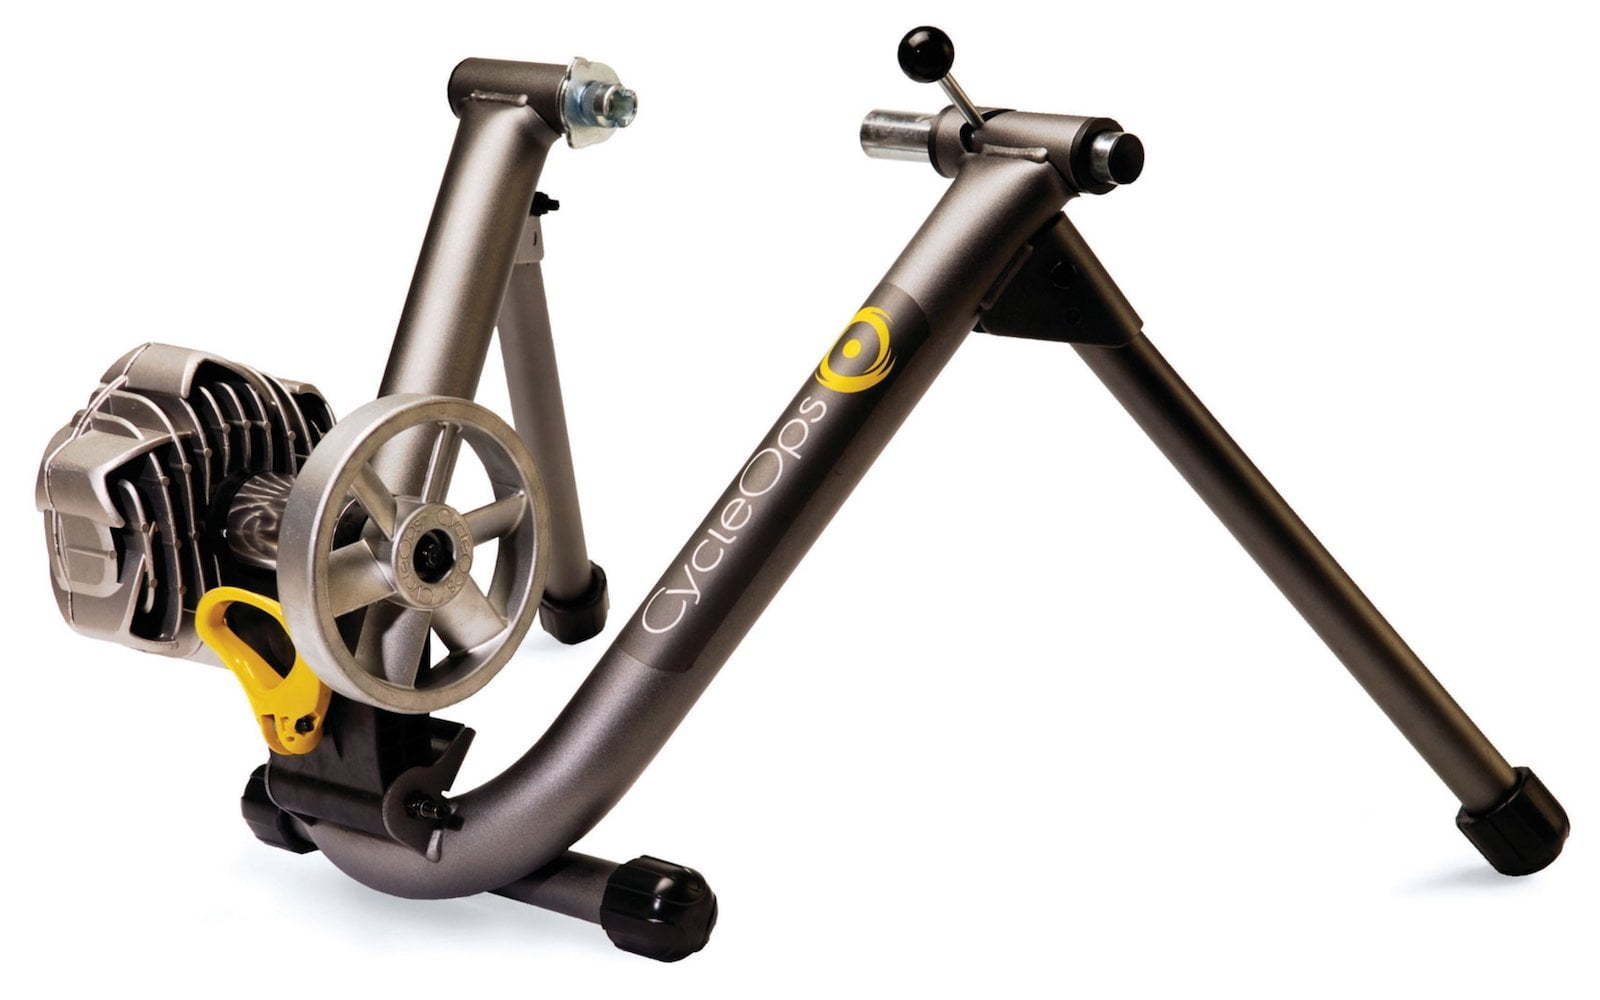 Đầu tư thiết bị chơi Zwift - Cycleops FluiD2 Bicycle InDoor Trainer